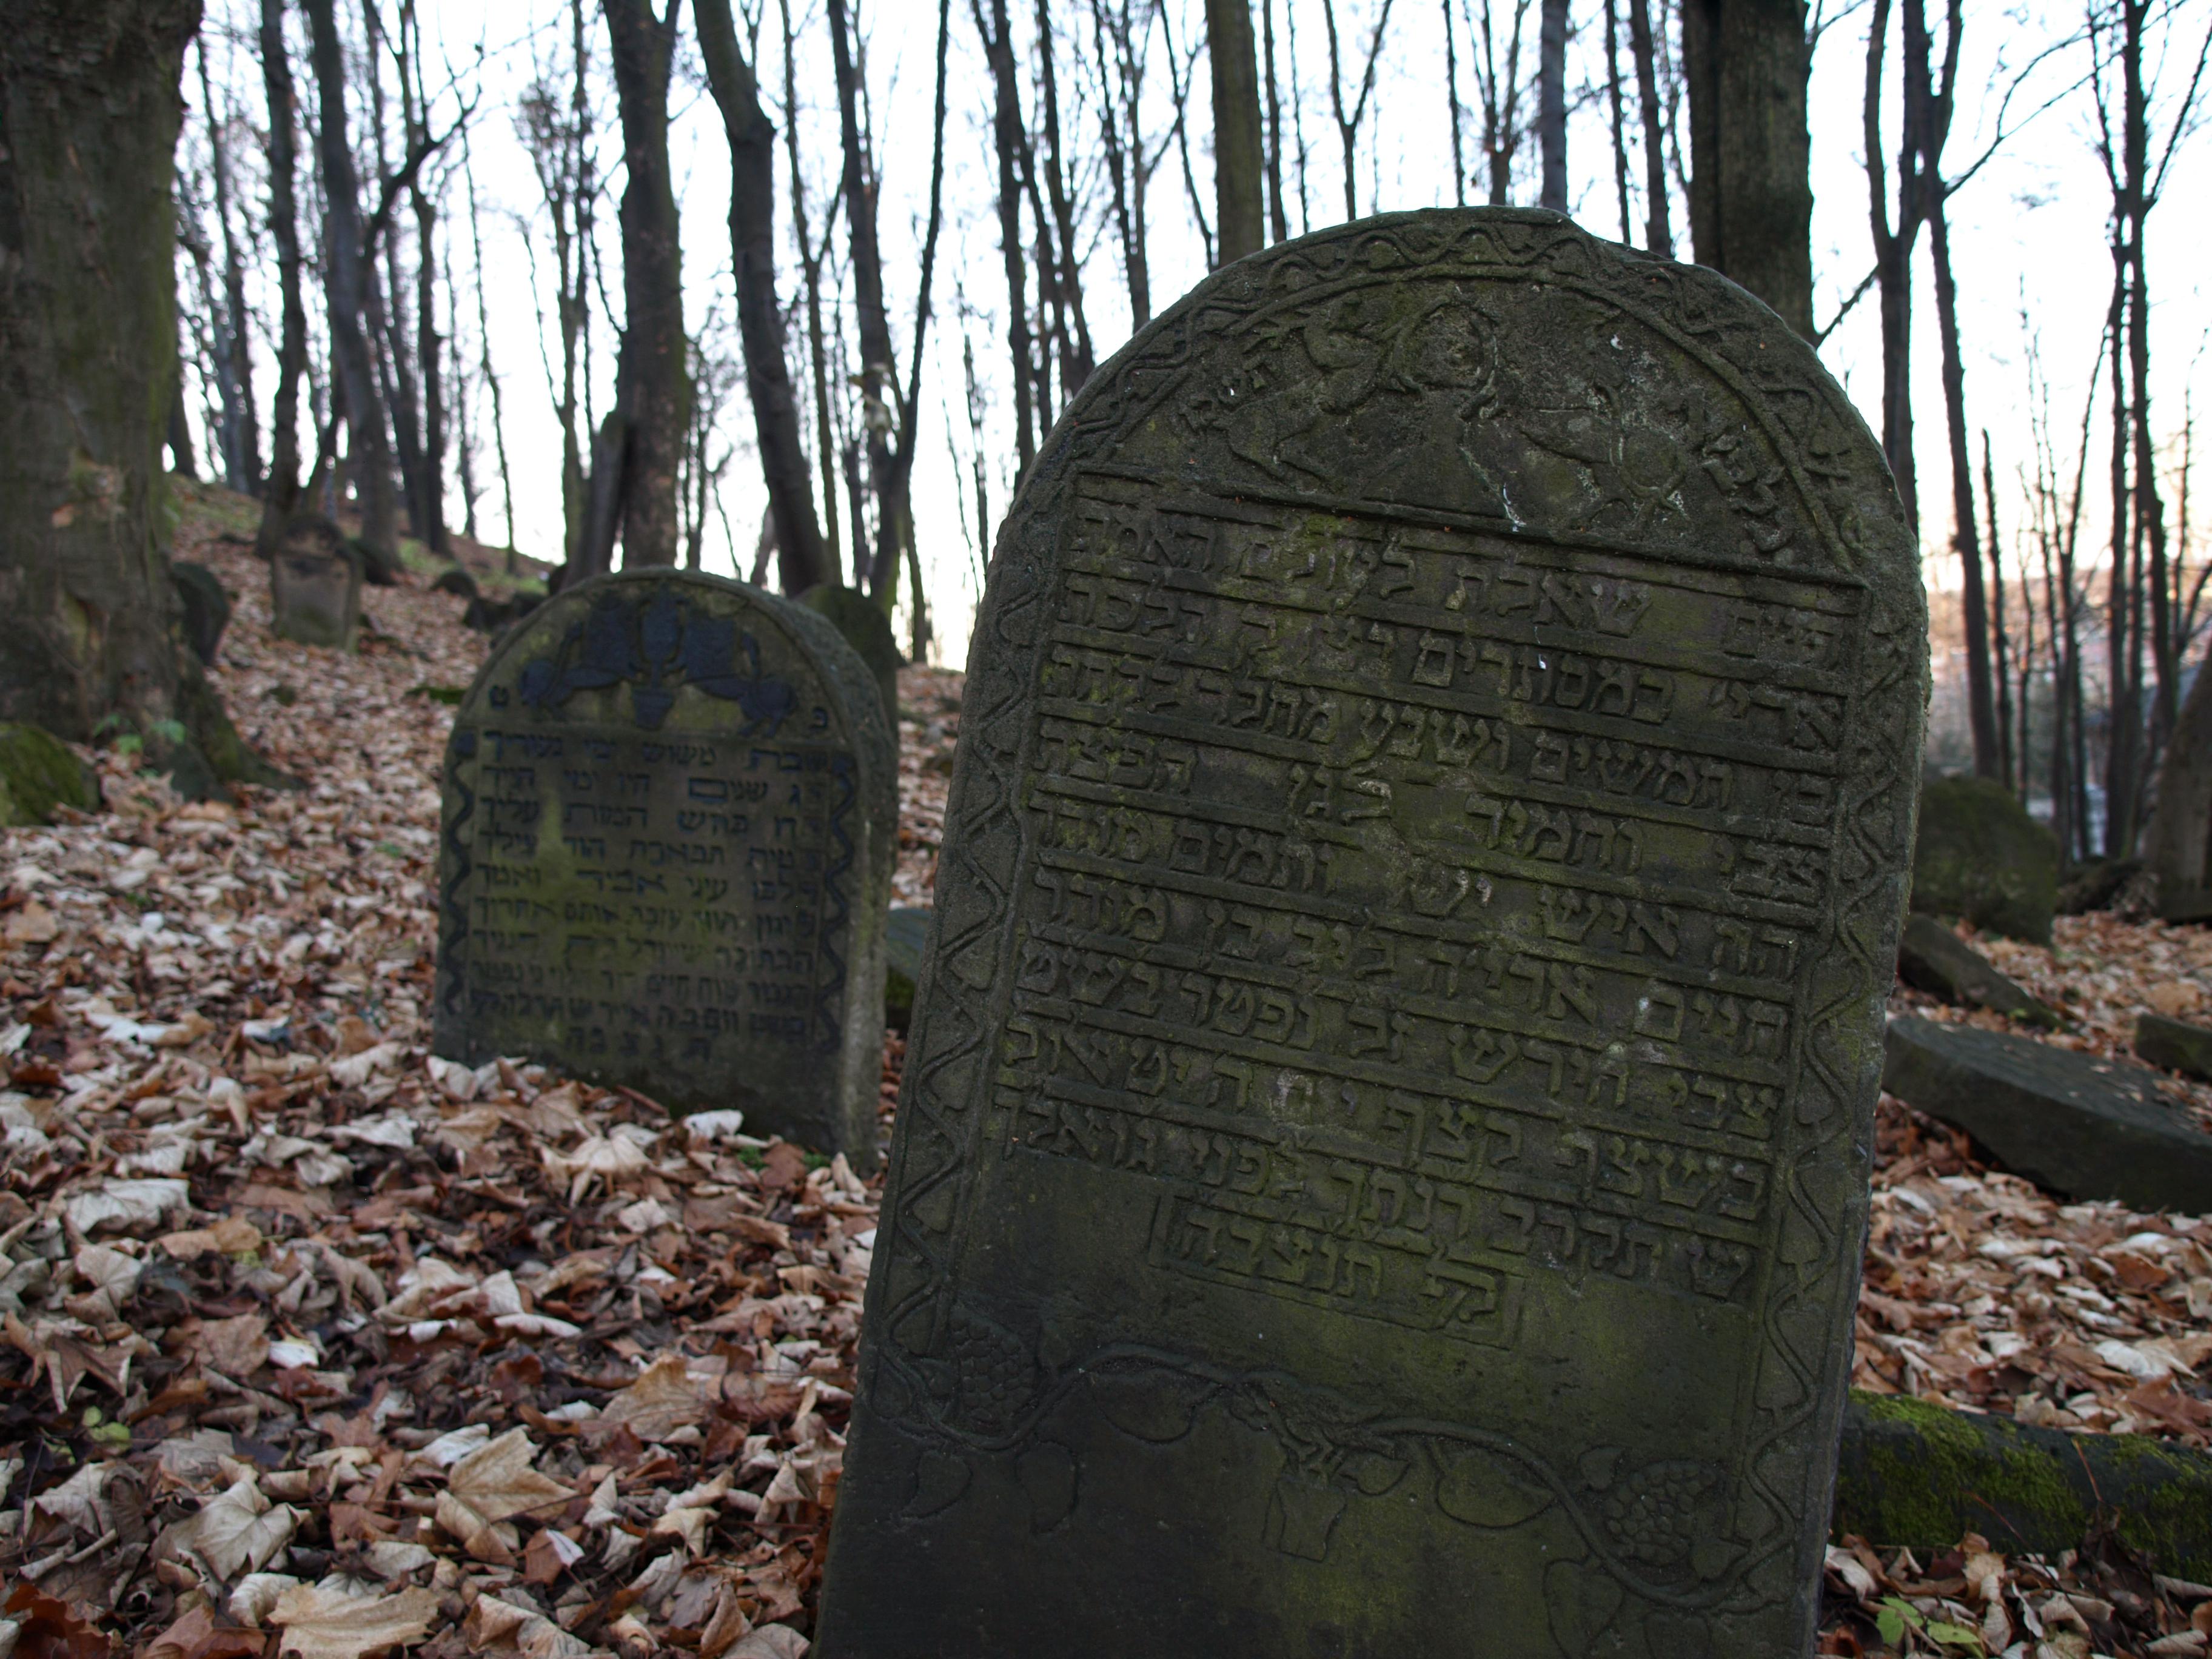 Nagrobek na cmentarzu